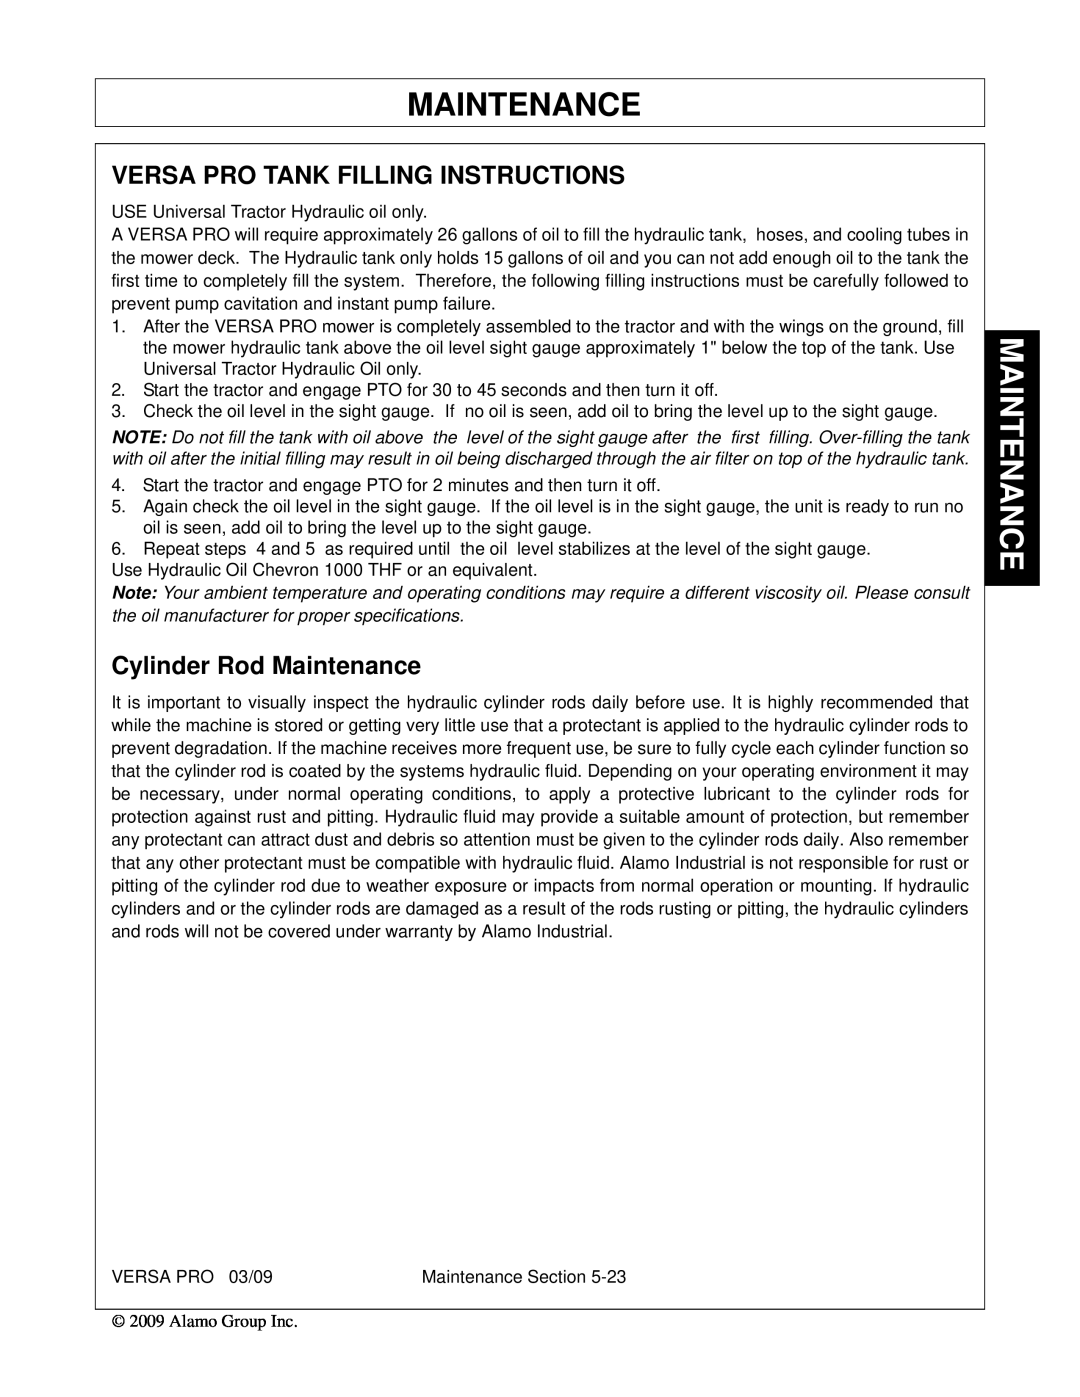 Alamo 803350C manual Versa Pro Tank Filling Instructions, Cylinder Rod Maintenance 